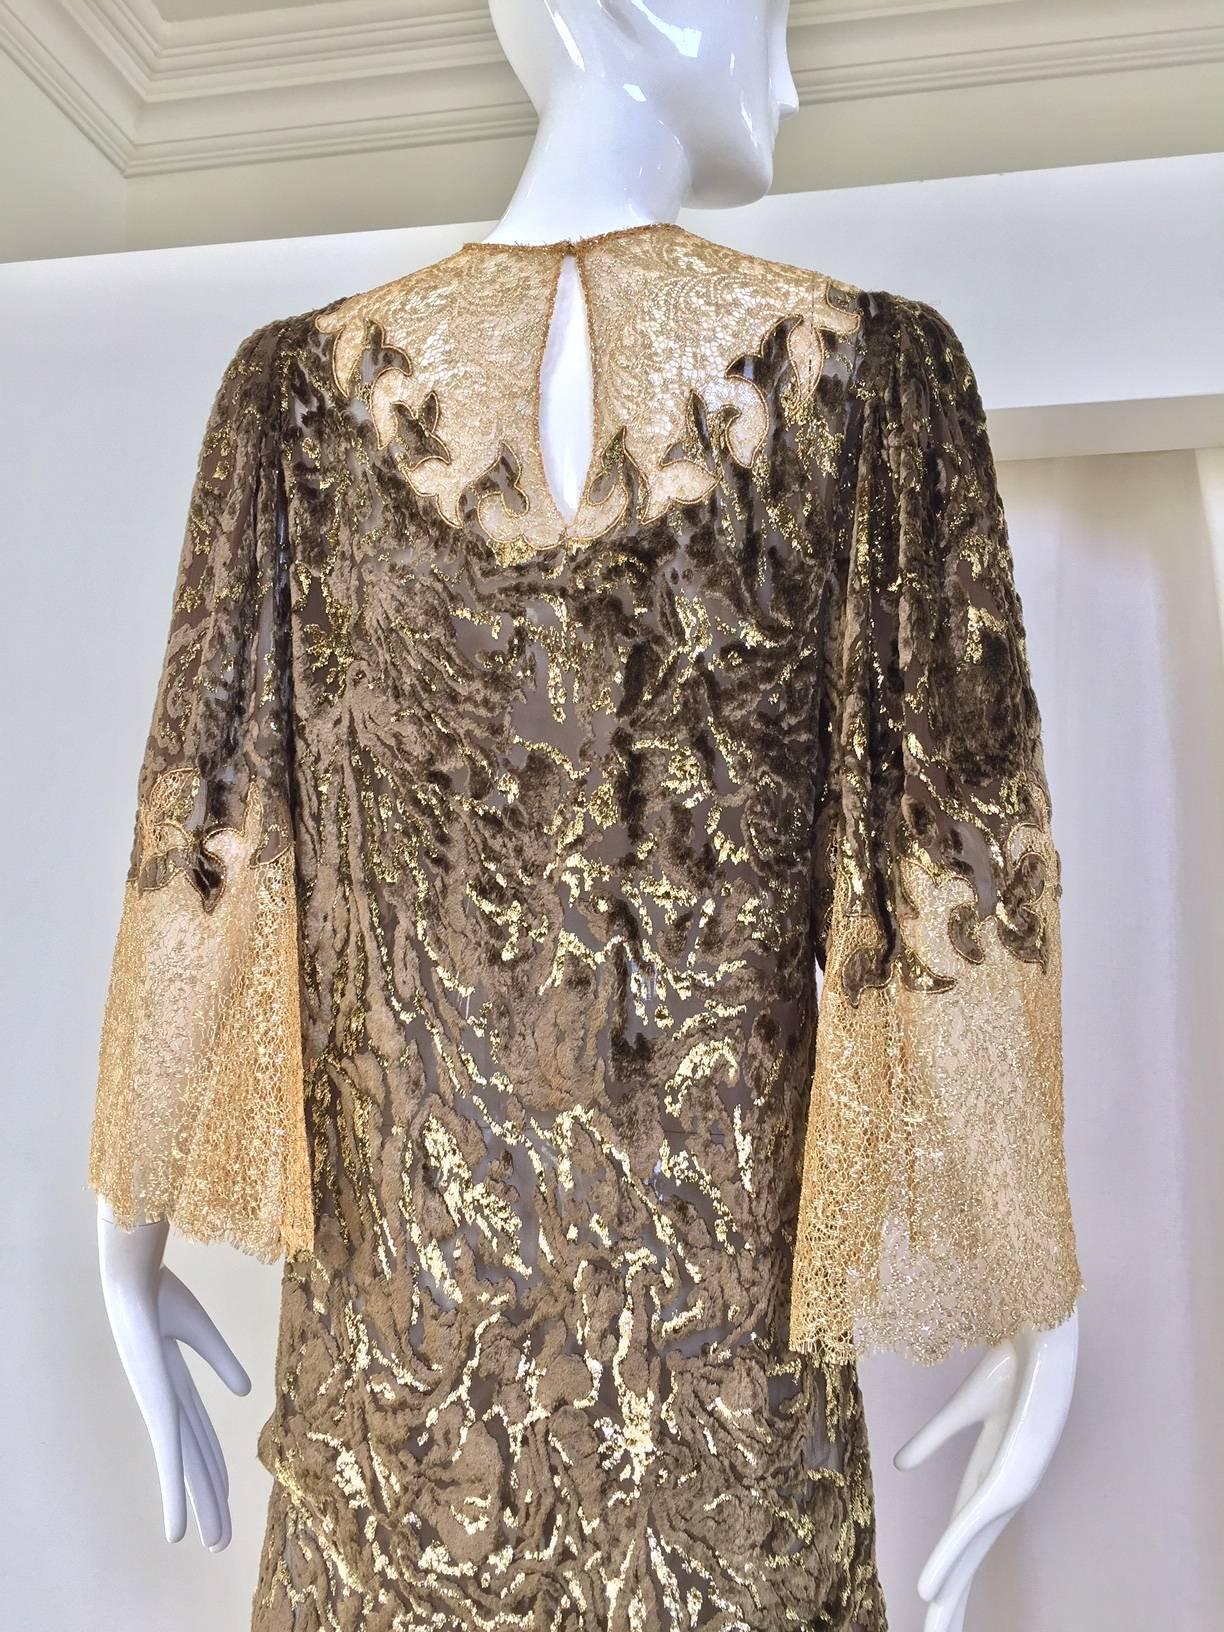 Beautiful 80s Oscar De La Renta brownvelvet devore and metallic gold lace dress.  
Measurement: 
Bust: 36 inches/ Waist: 36 inches/ HIp: 36 inches / dress length: 48 inches

